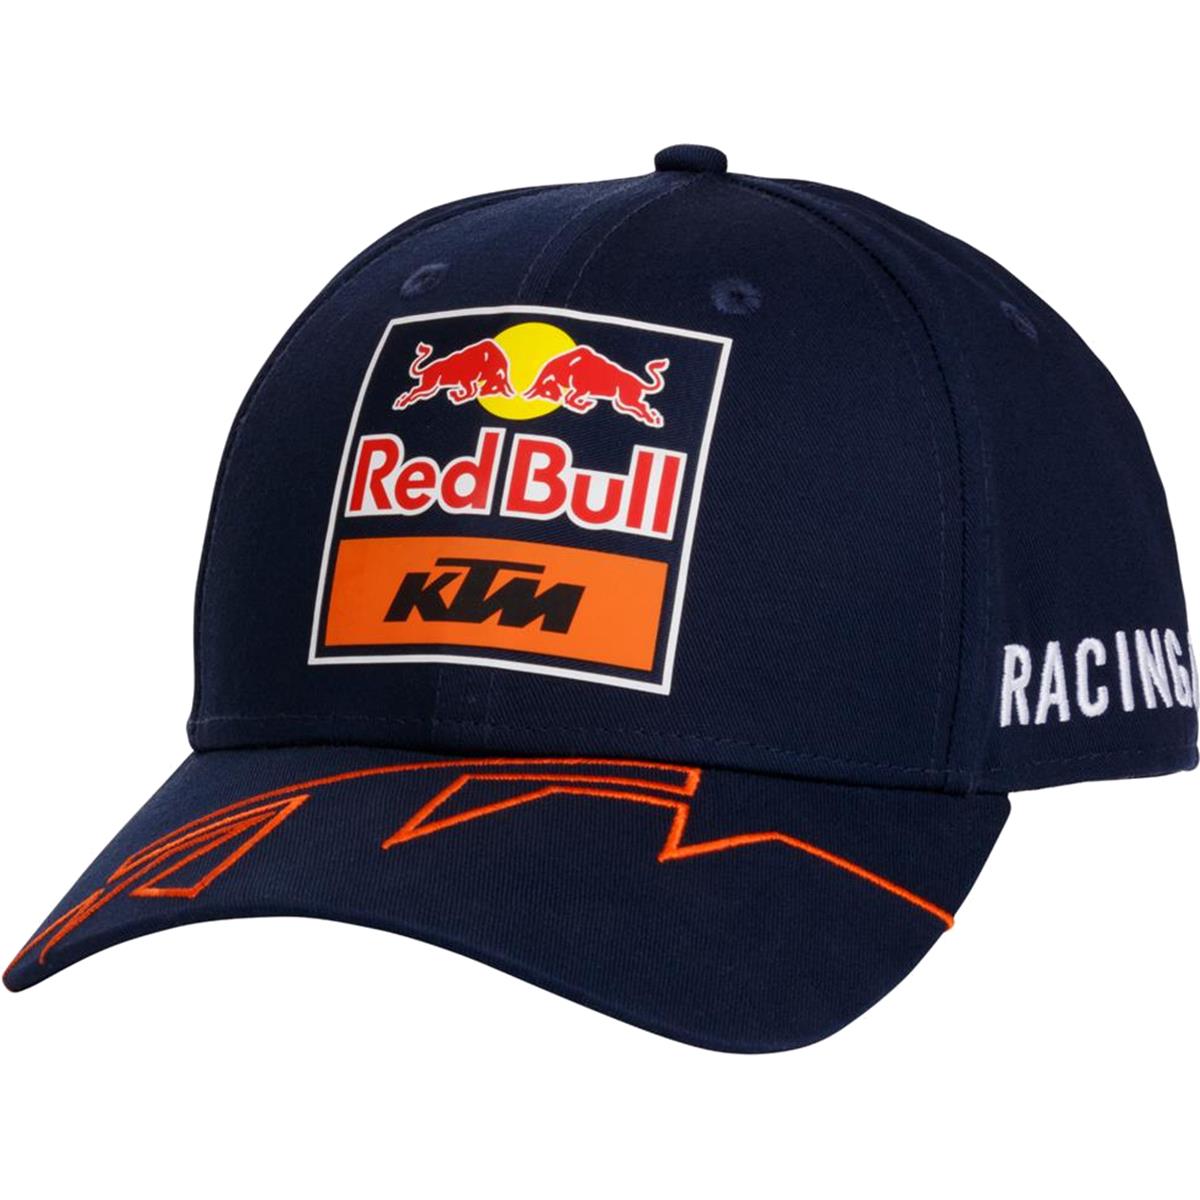 Red Bull Cappellino Strapback KTM New Era OTL Navy/Arancione